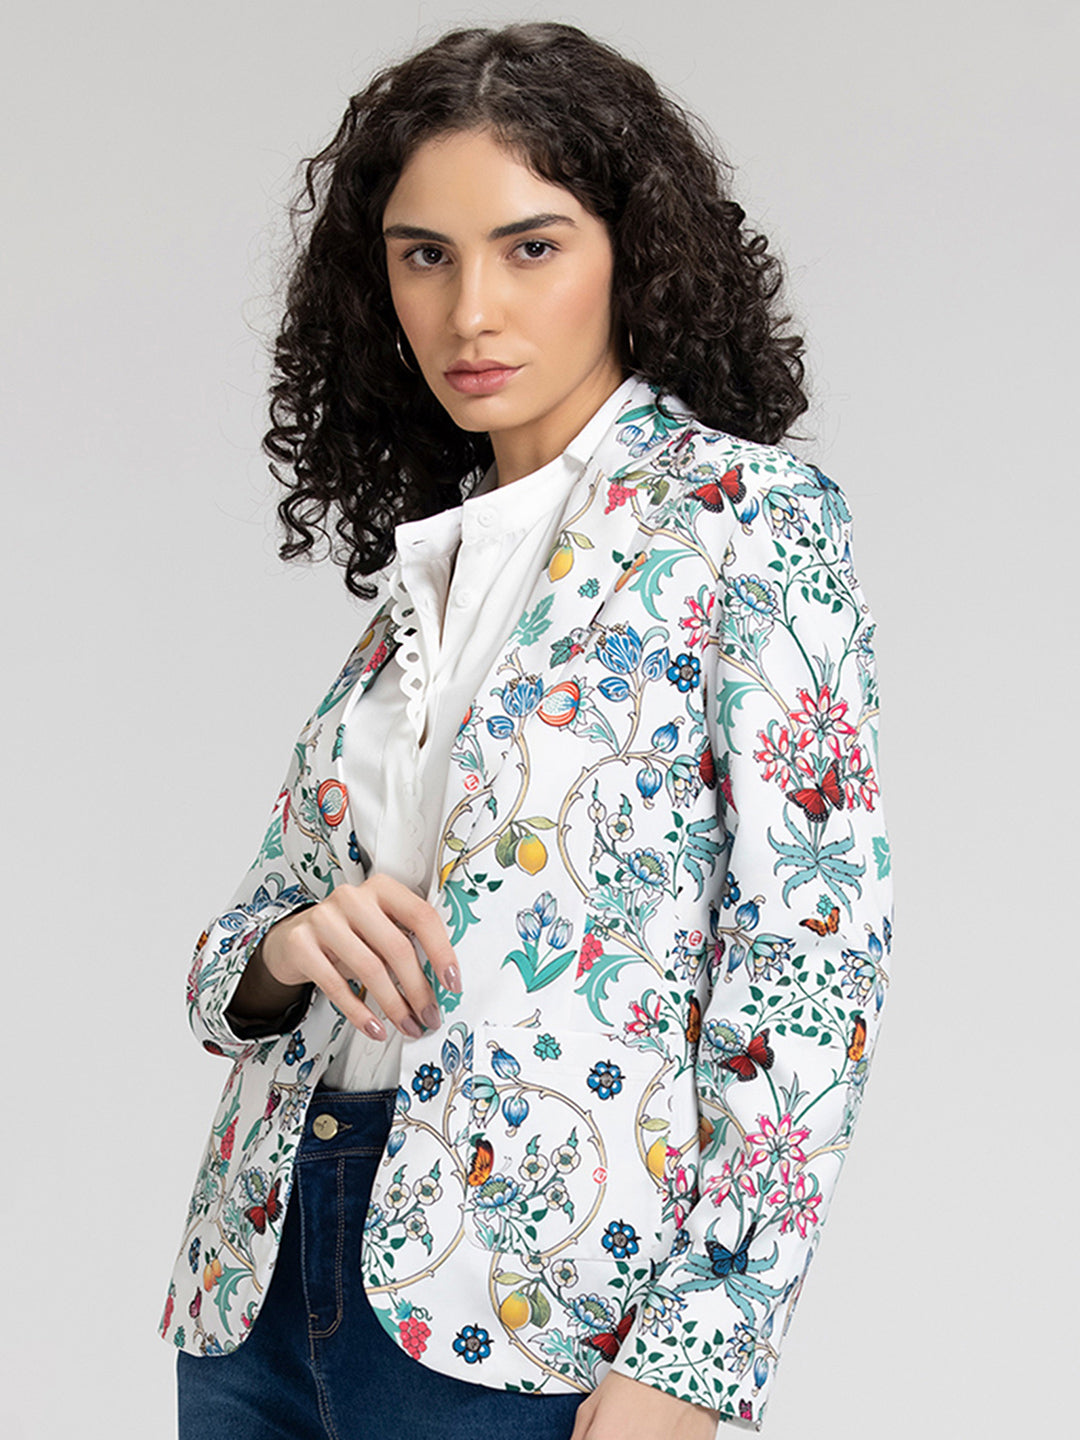 Bellasima blazer | Jackets for women – Shaye India